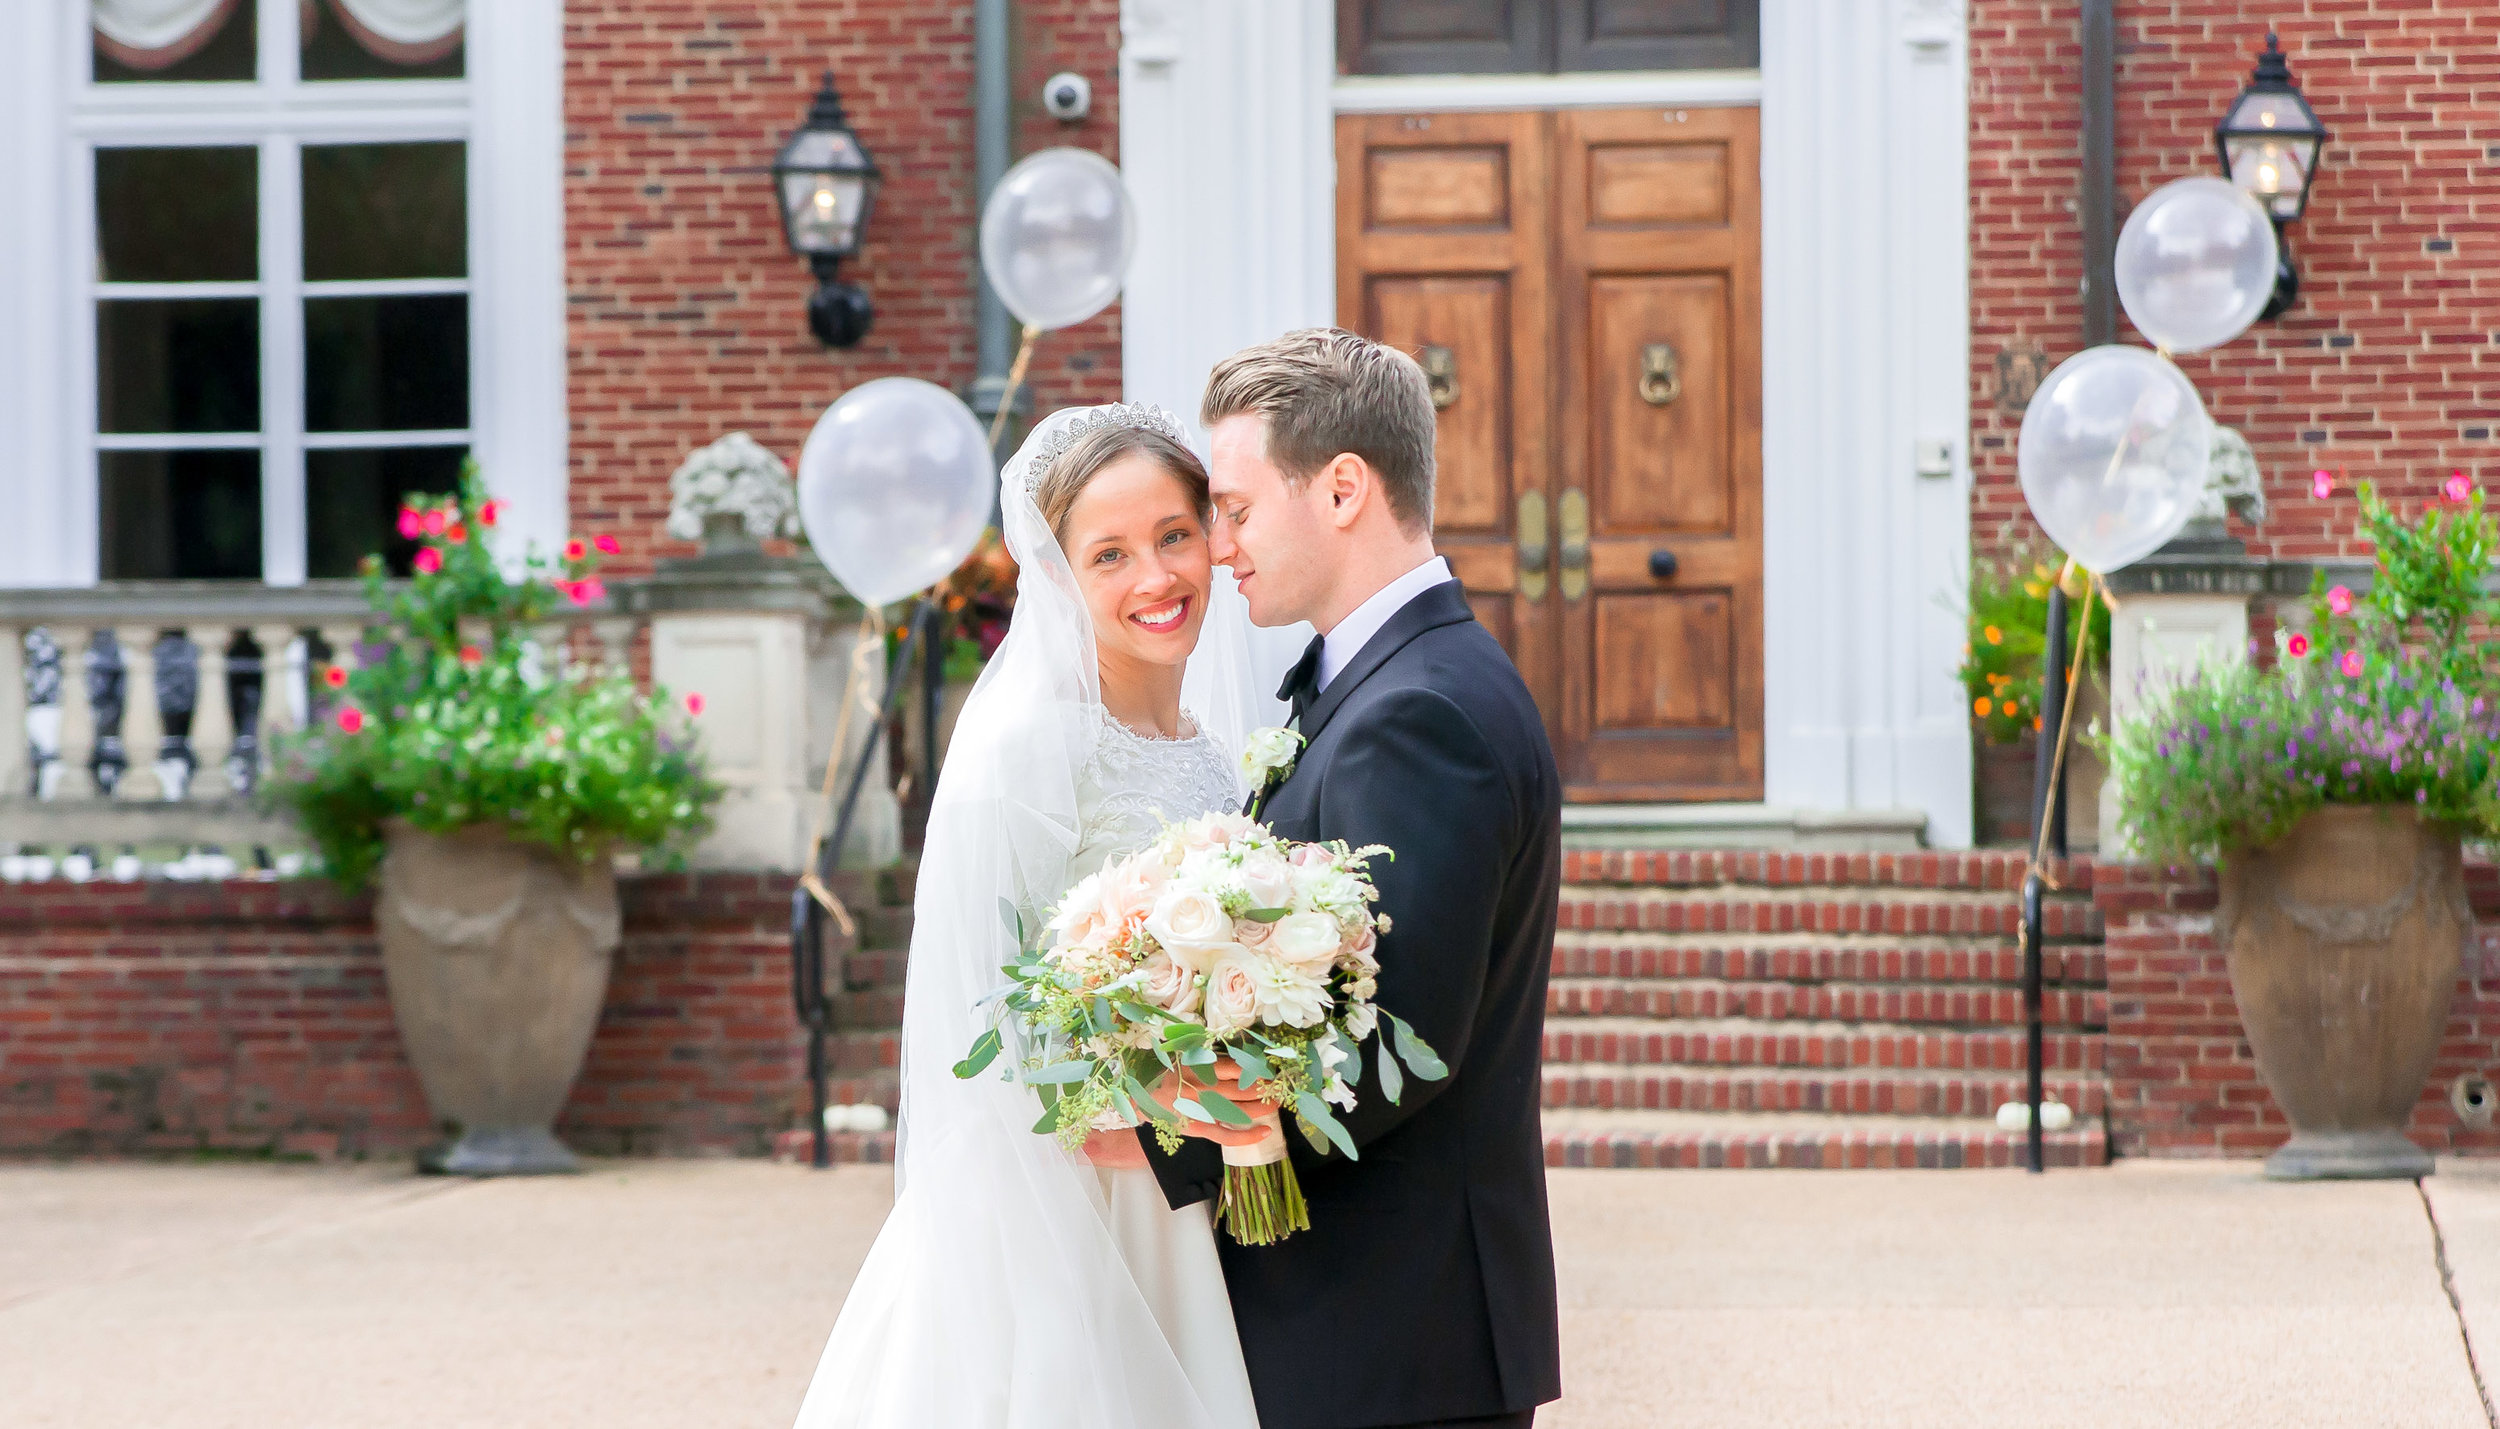 Beautiful bride and groom wedding photos at Oxon Hill Manor by Jessica Nazarova